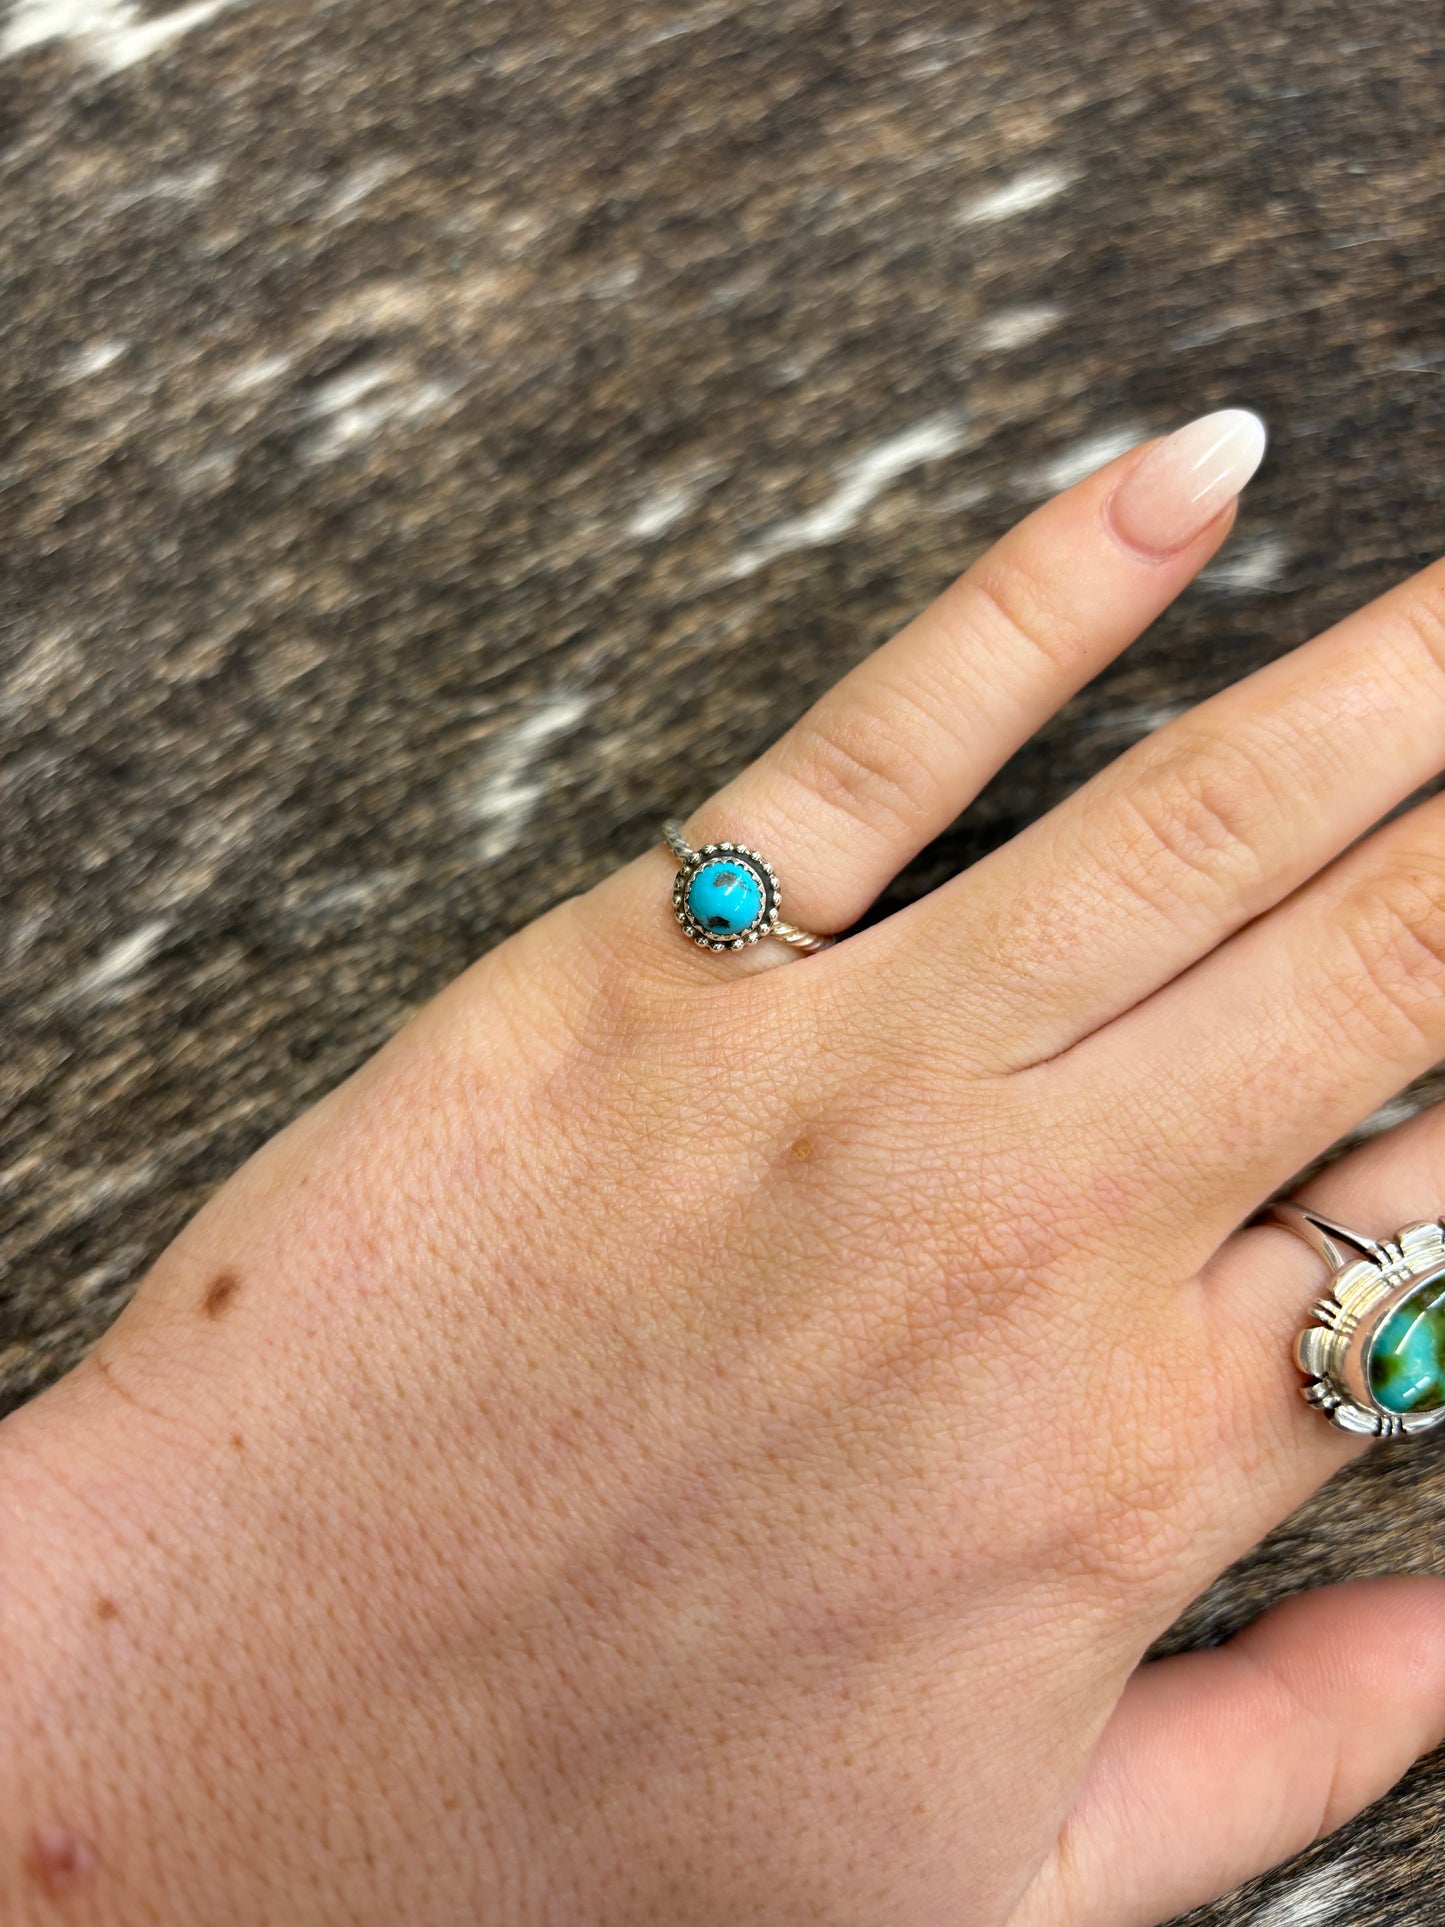 The Elaine Authentic Turquoise Ring - size 5